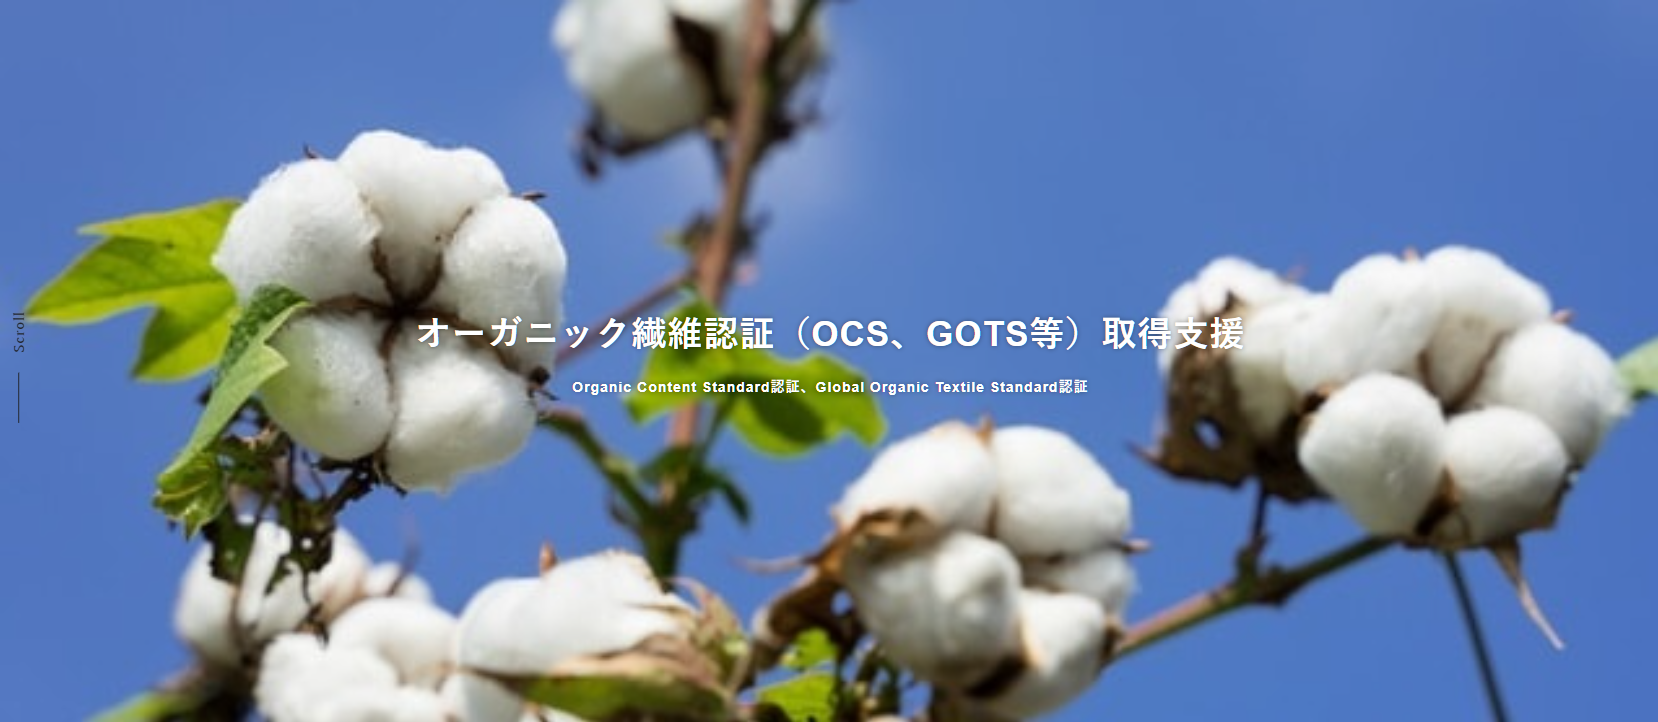 OCS, OCS認証, organic cotton, オーガニックコットン認証, コンサルティング